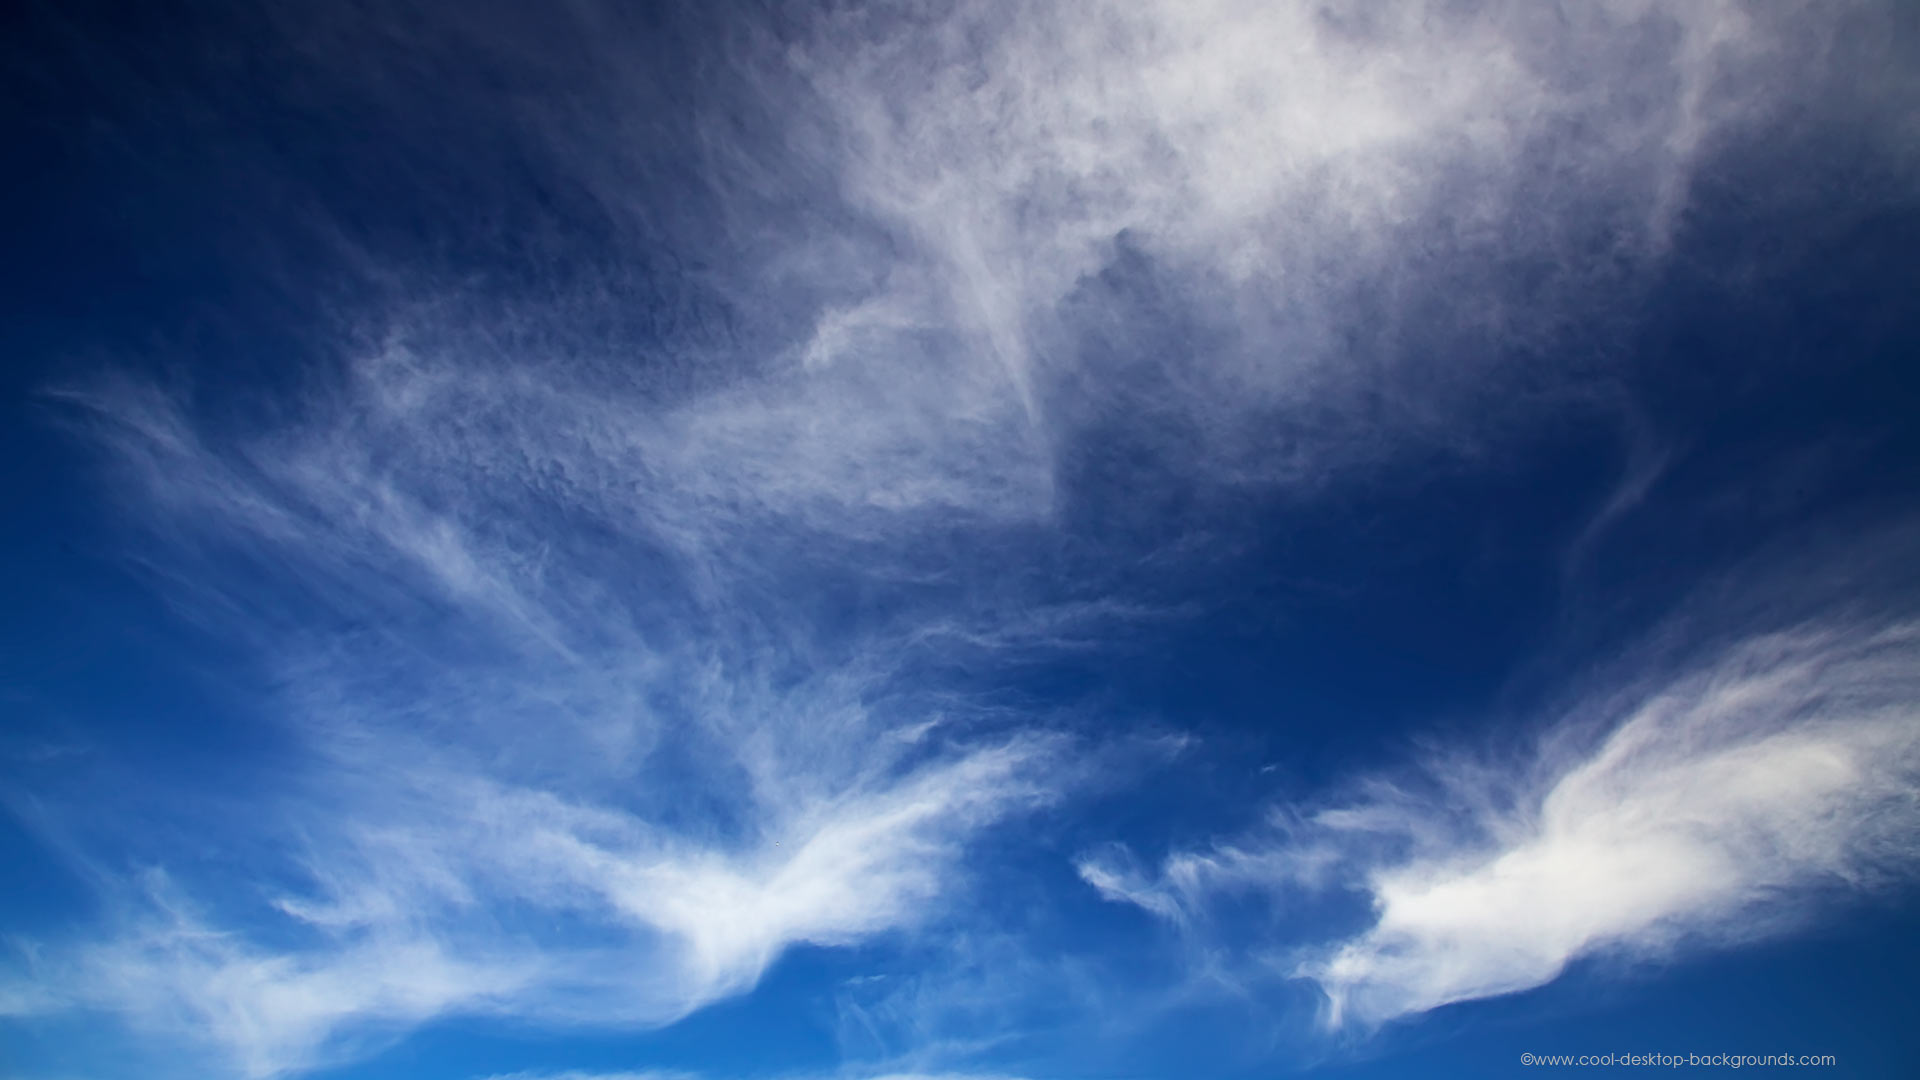 Thin Cirrus Clouds   Clouds Desktop Background   1920x1080 pixels